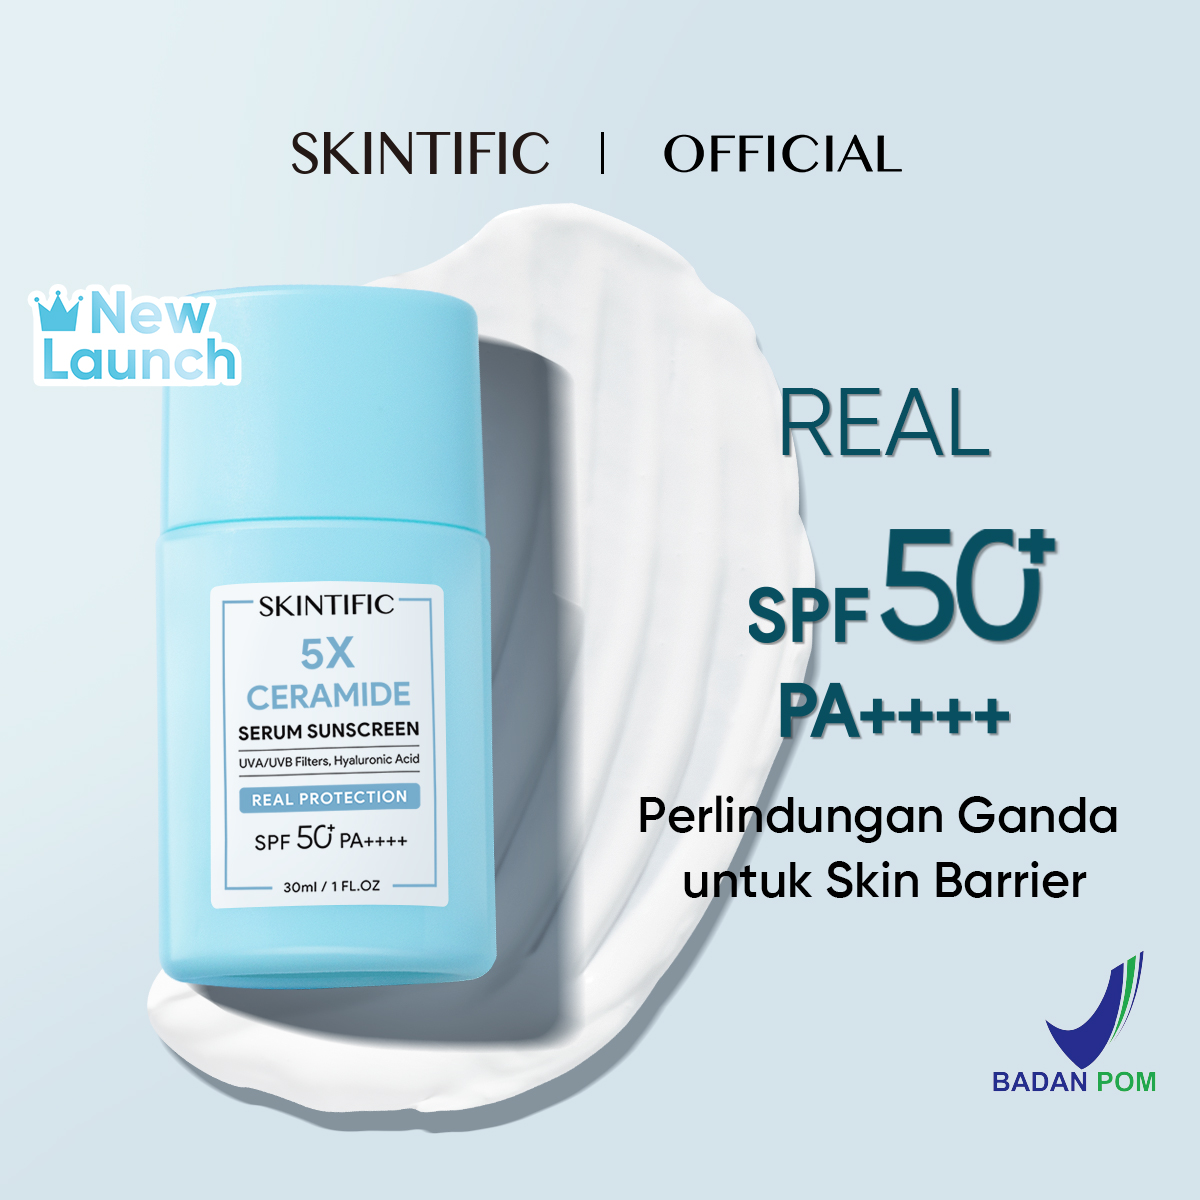 Promo Skintific 5X Ceramide Serum Sunscreen Diskon 48% di Seller